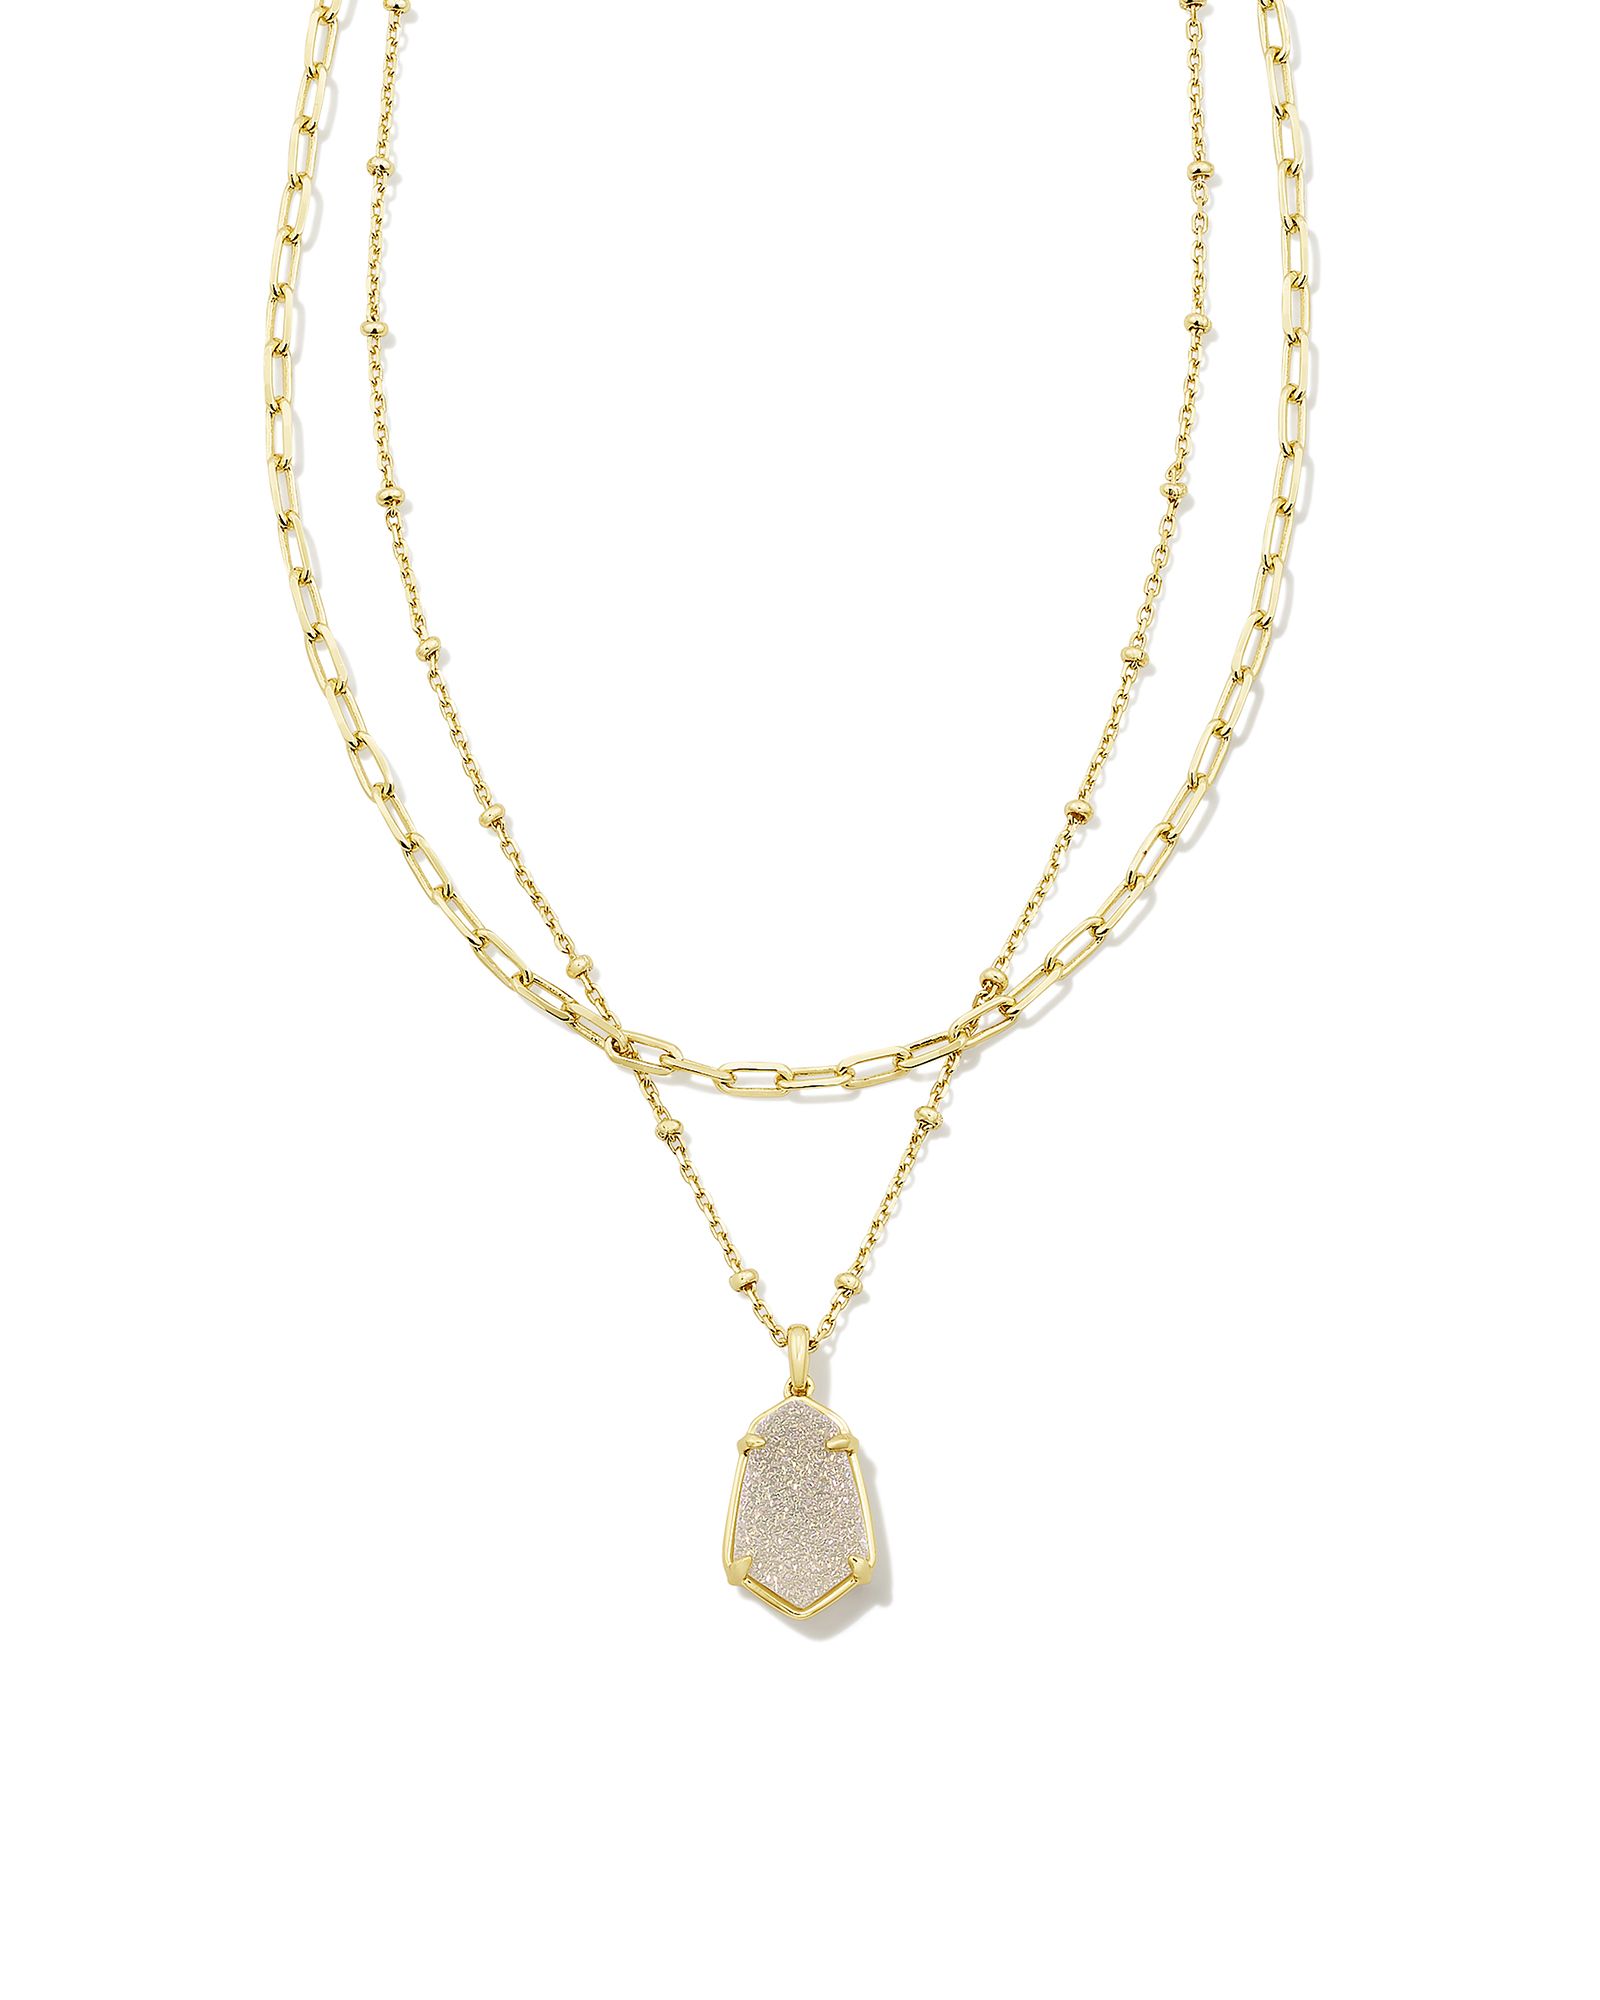 Alexandria Gold Multi Strand Necklace in Iridescent Drusy | Kendra Scott | Kendra Scott